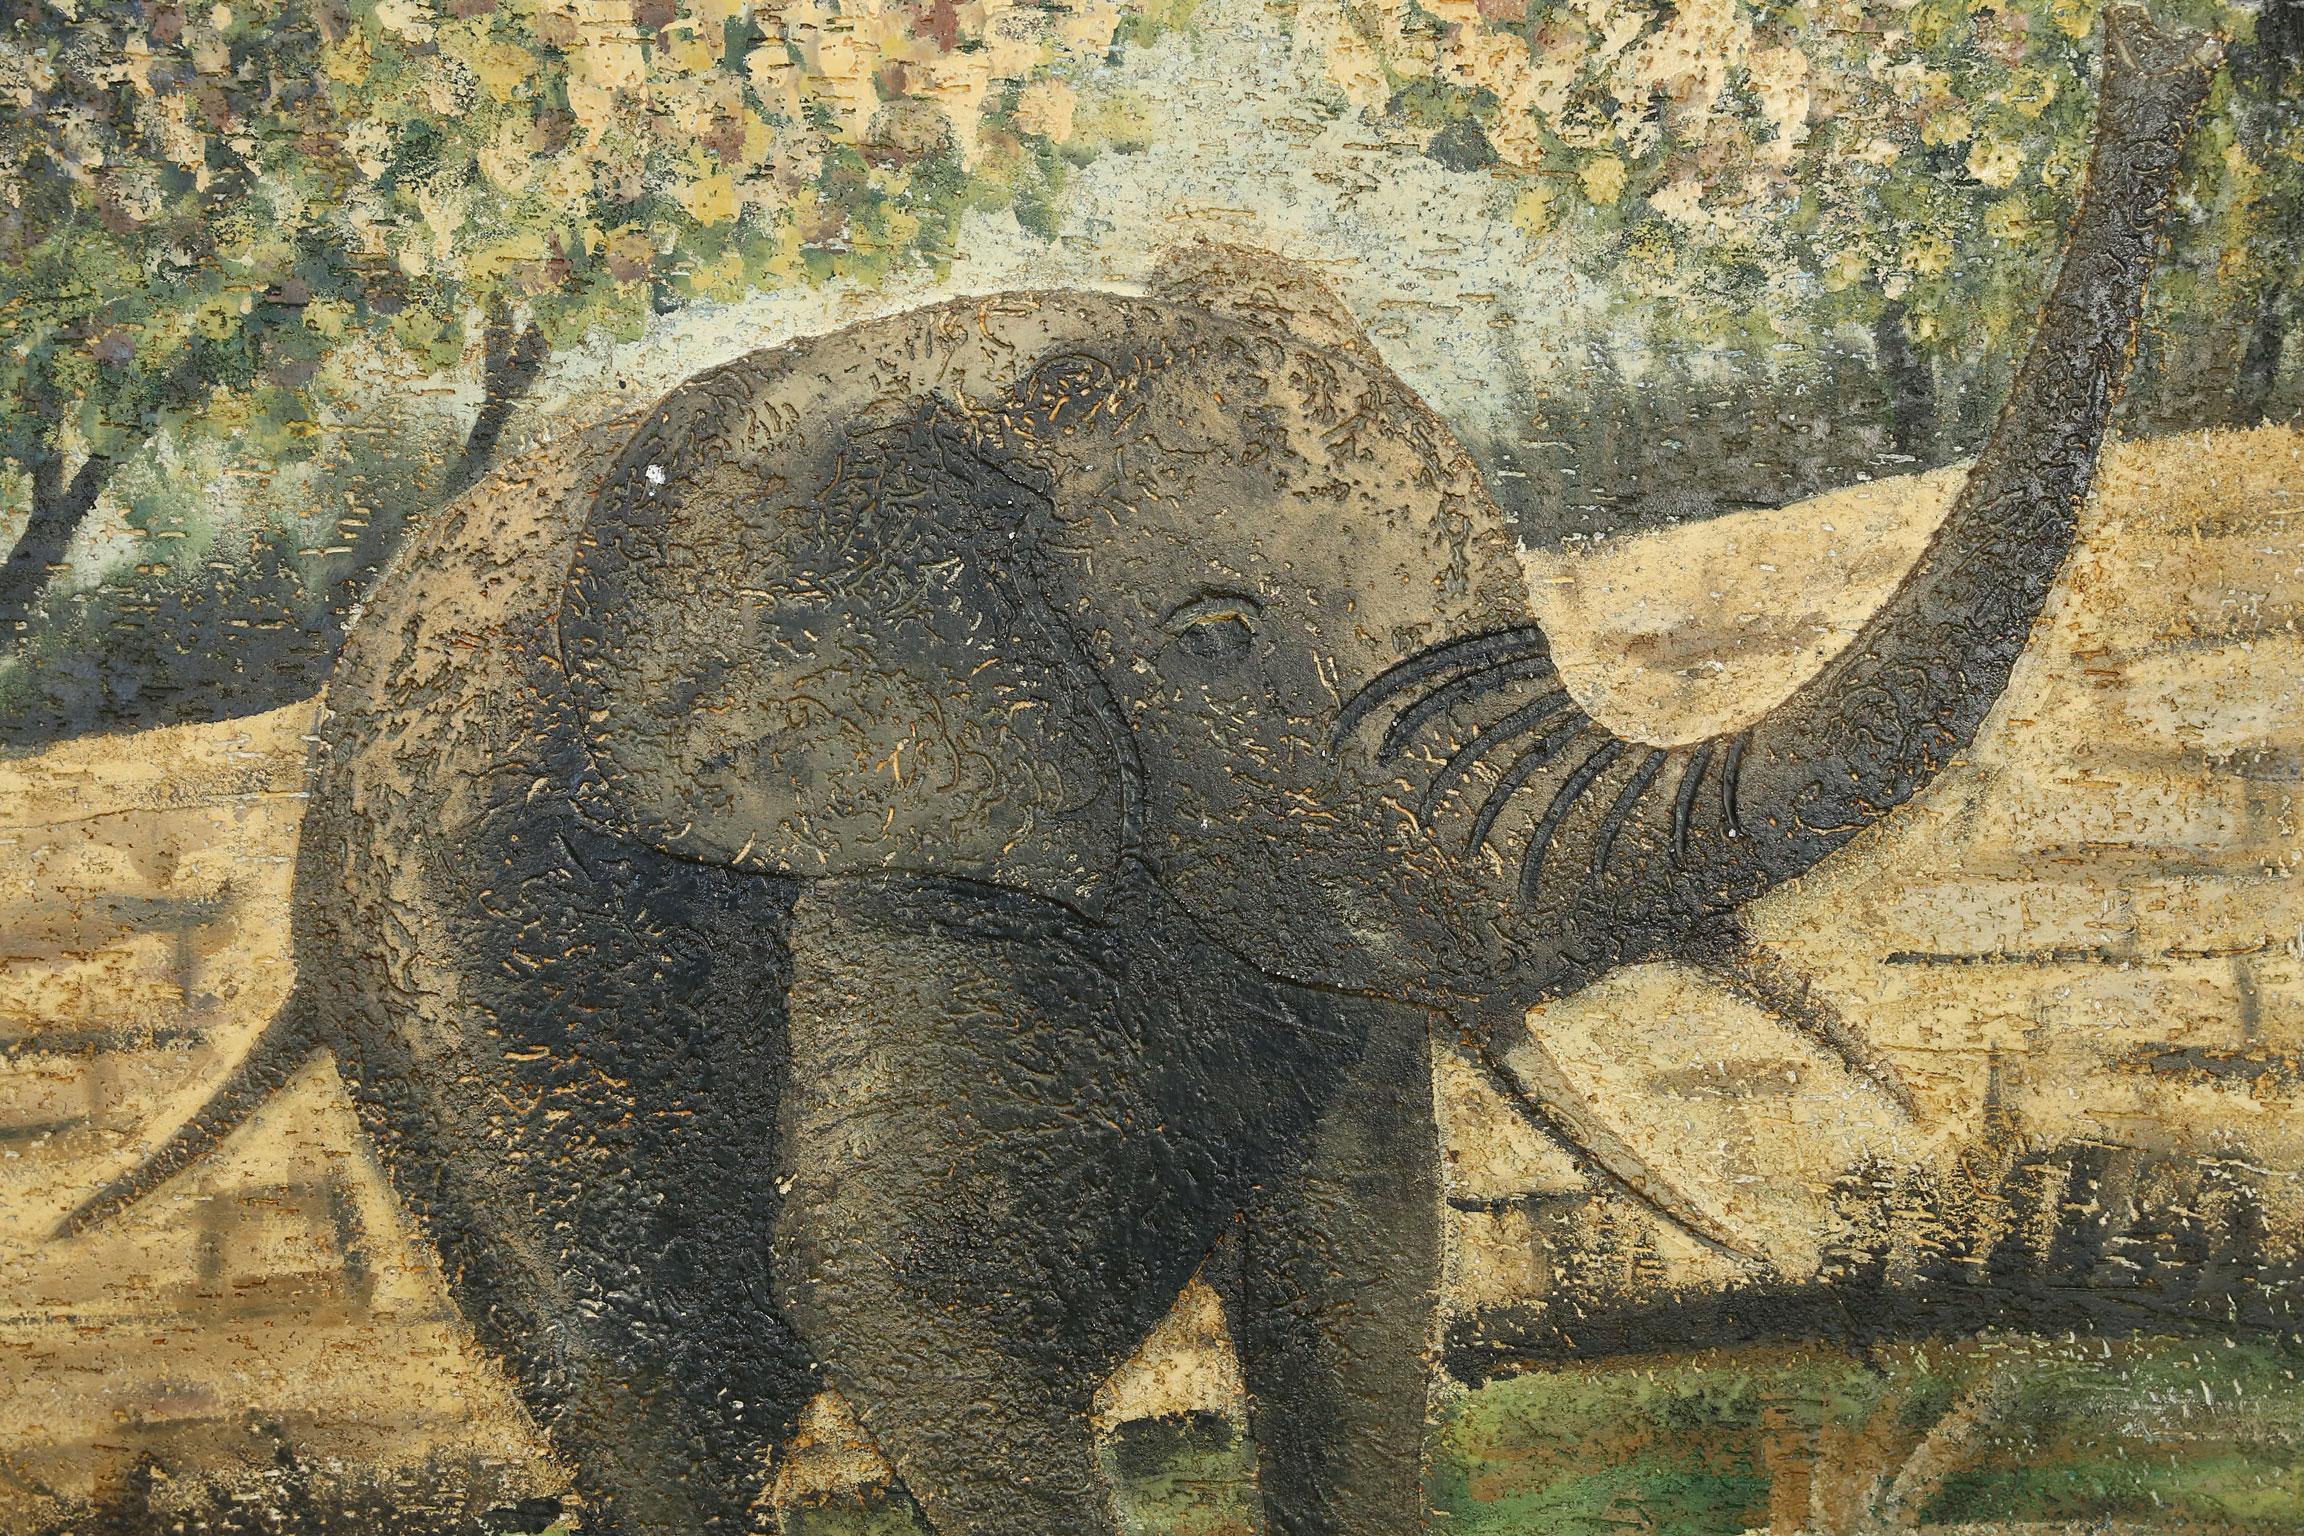 Belgian Large Original European Textured Painting of Elephant